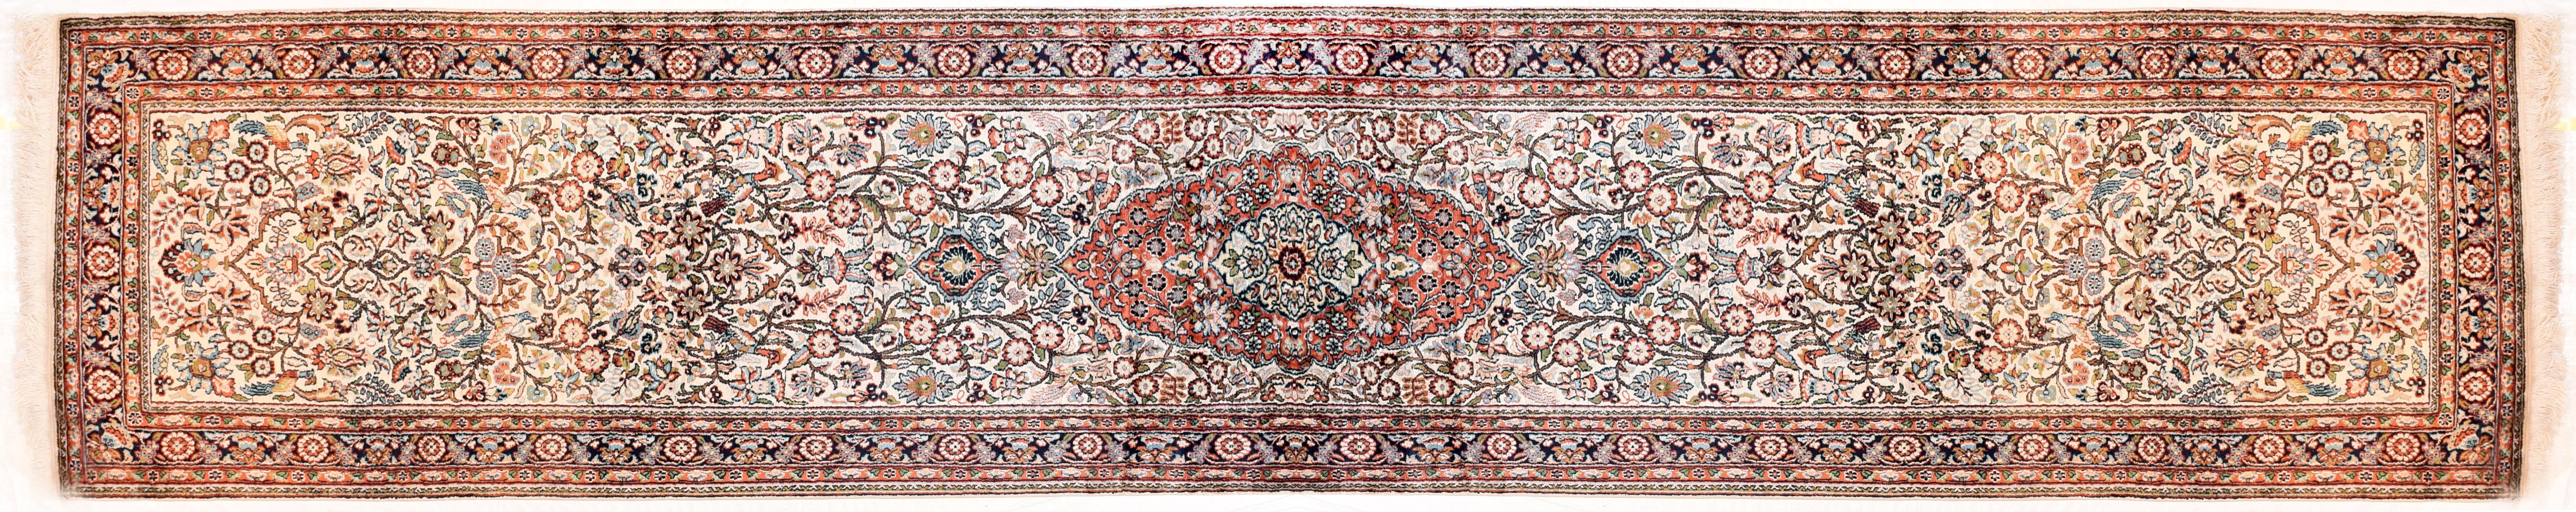 kashmiri carpets online india